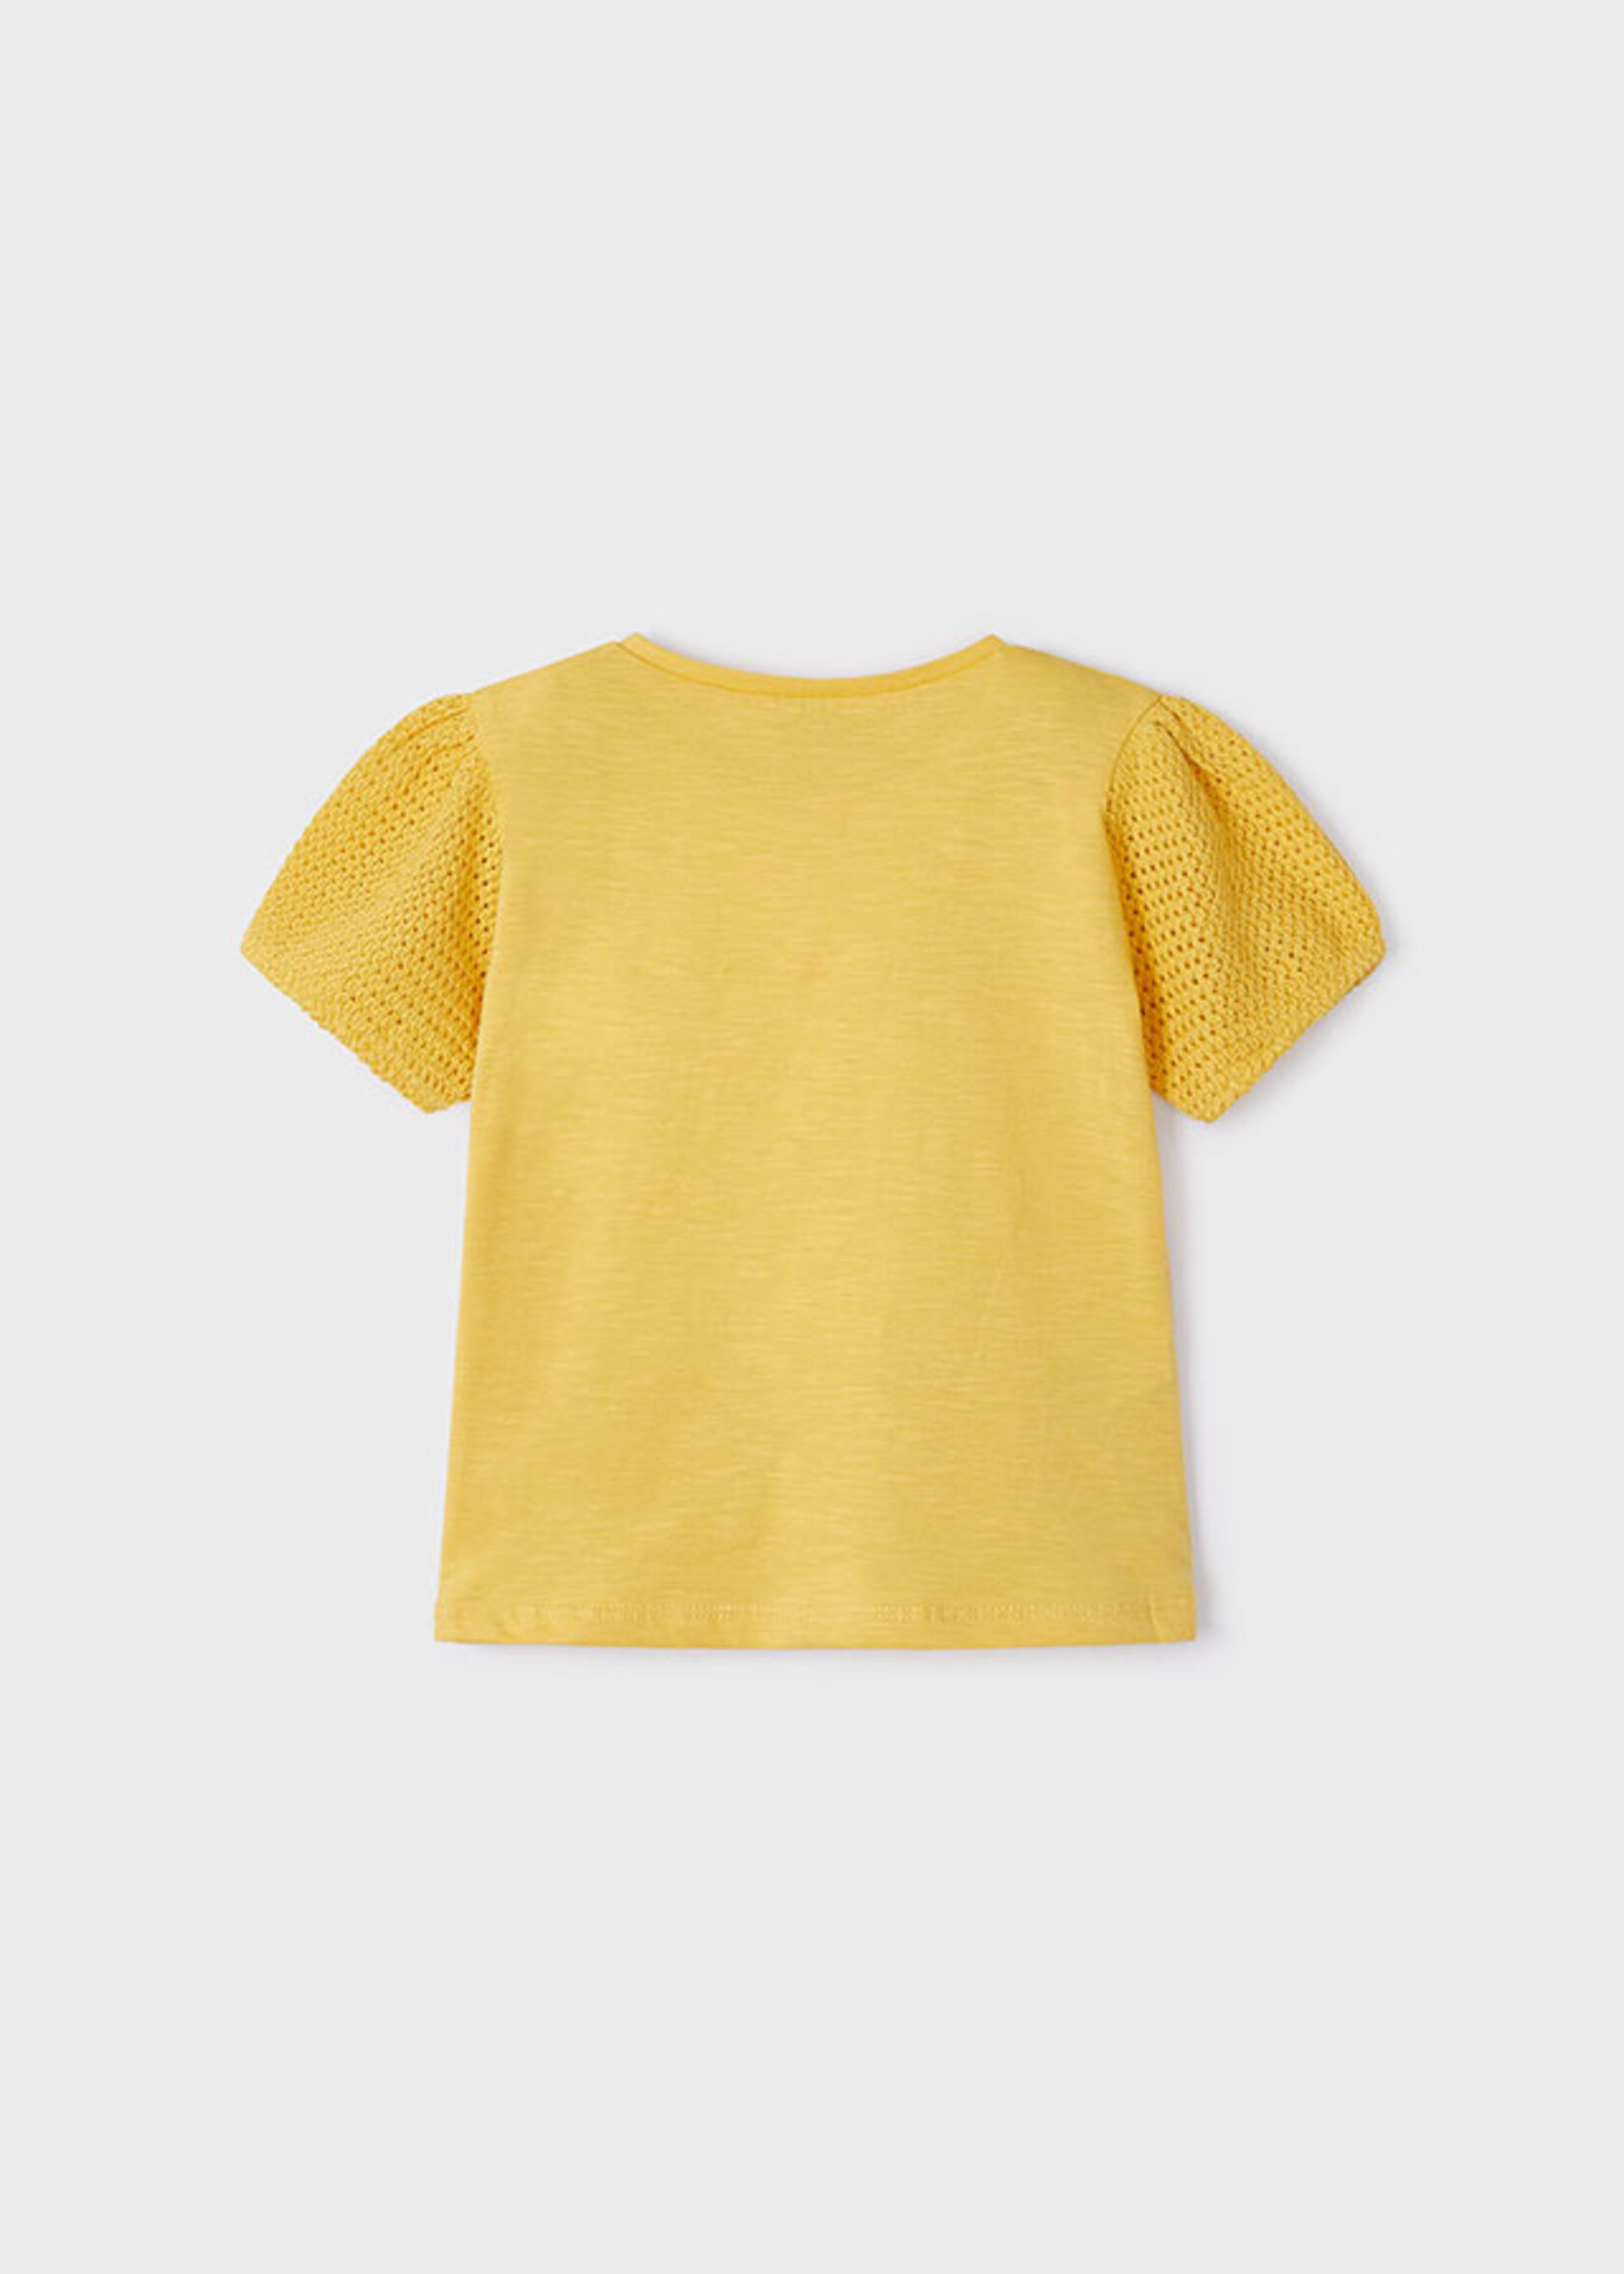 Mayoral Mini Girl            3085 S/s t-shirt                   Honey